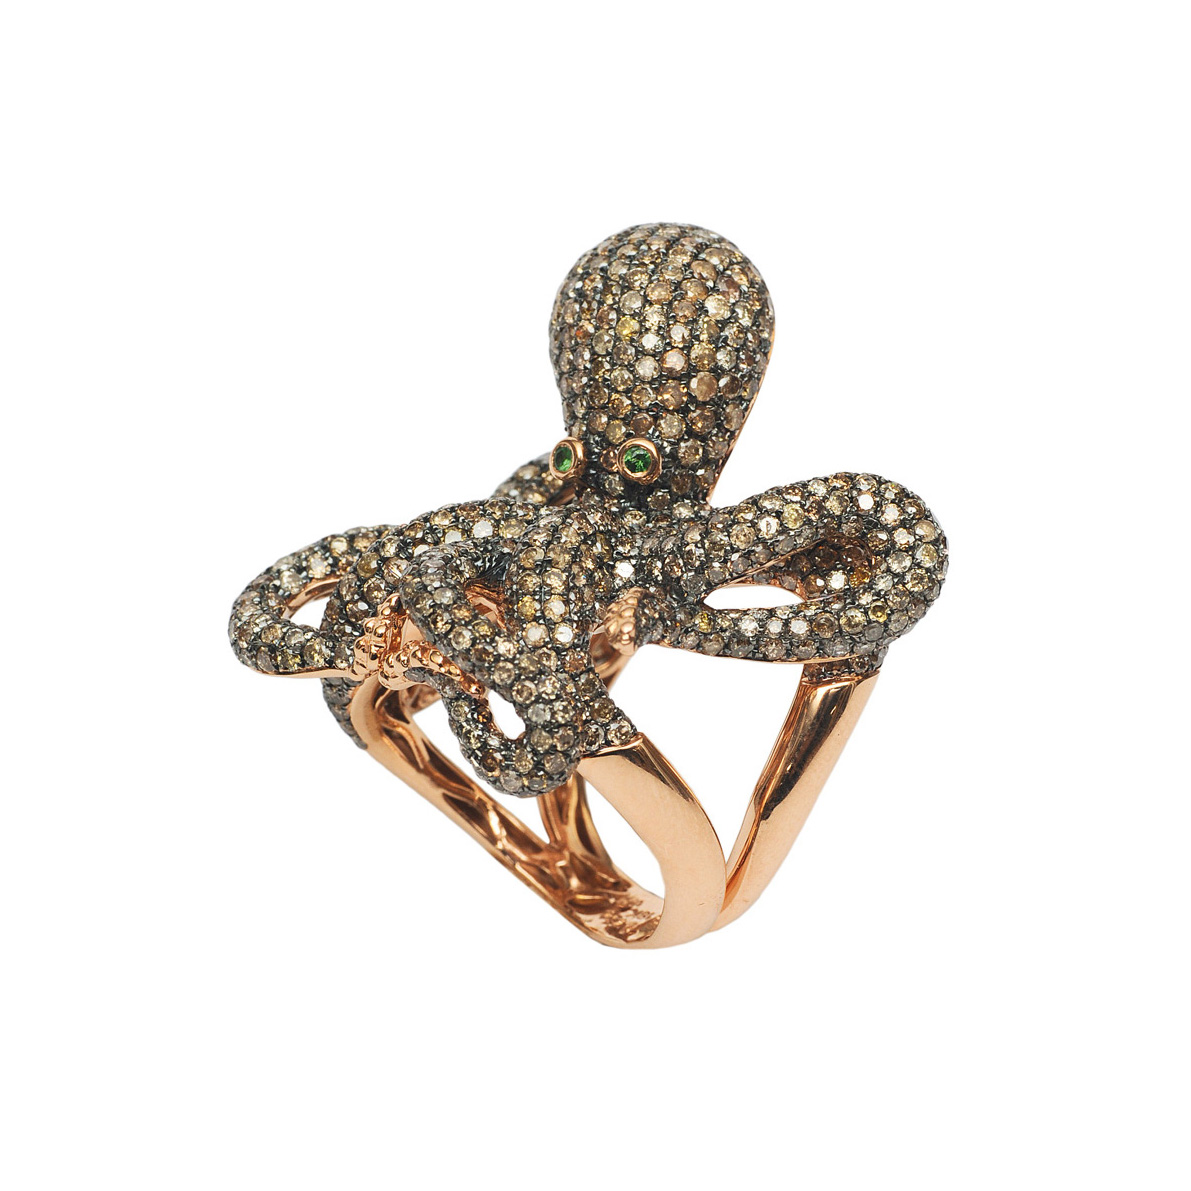 A large Fancy-diamond ring "Octopus"